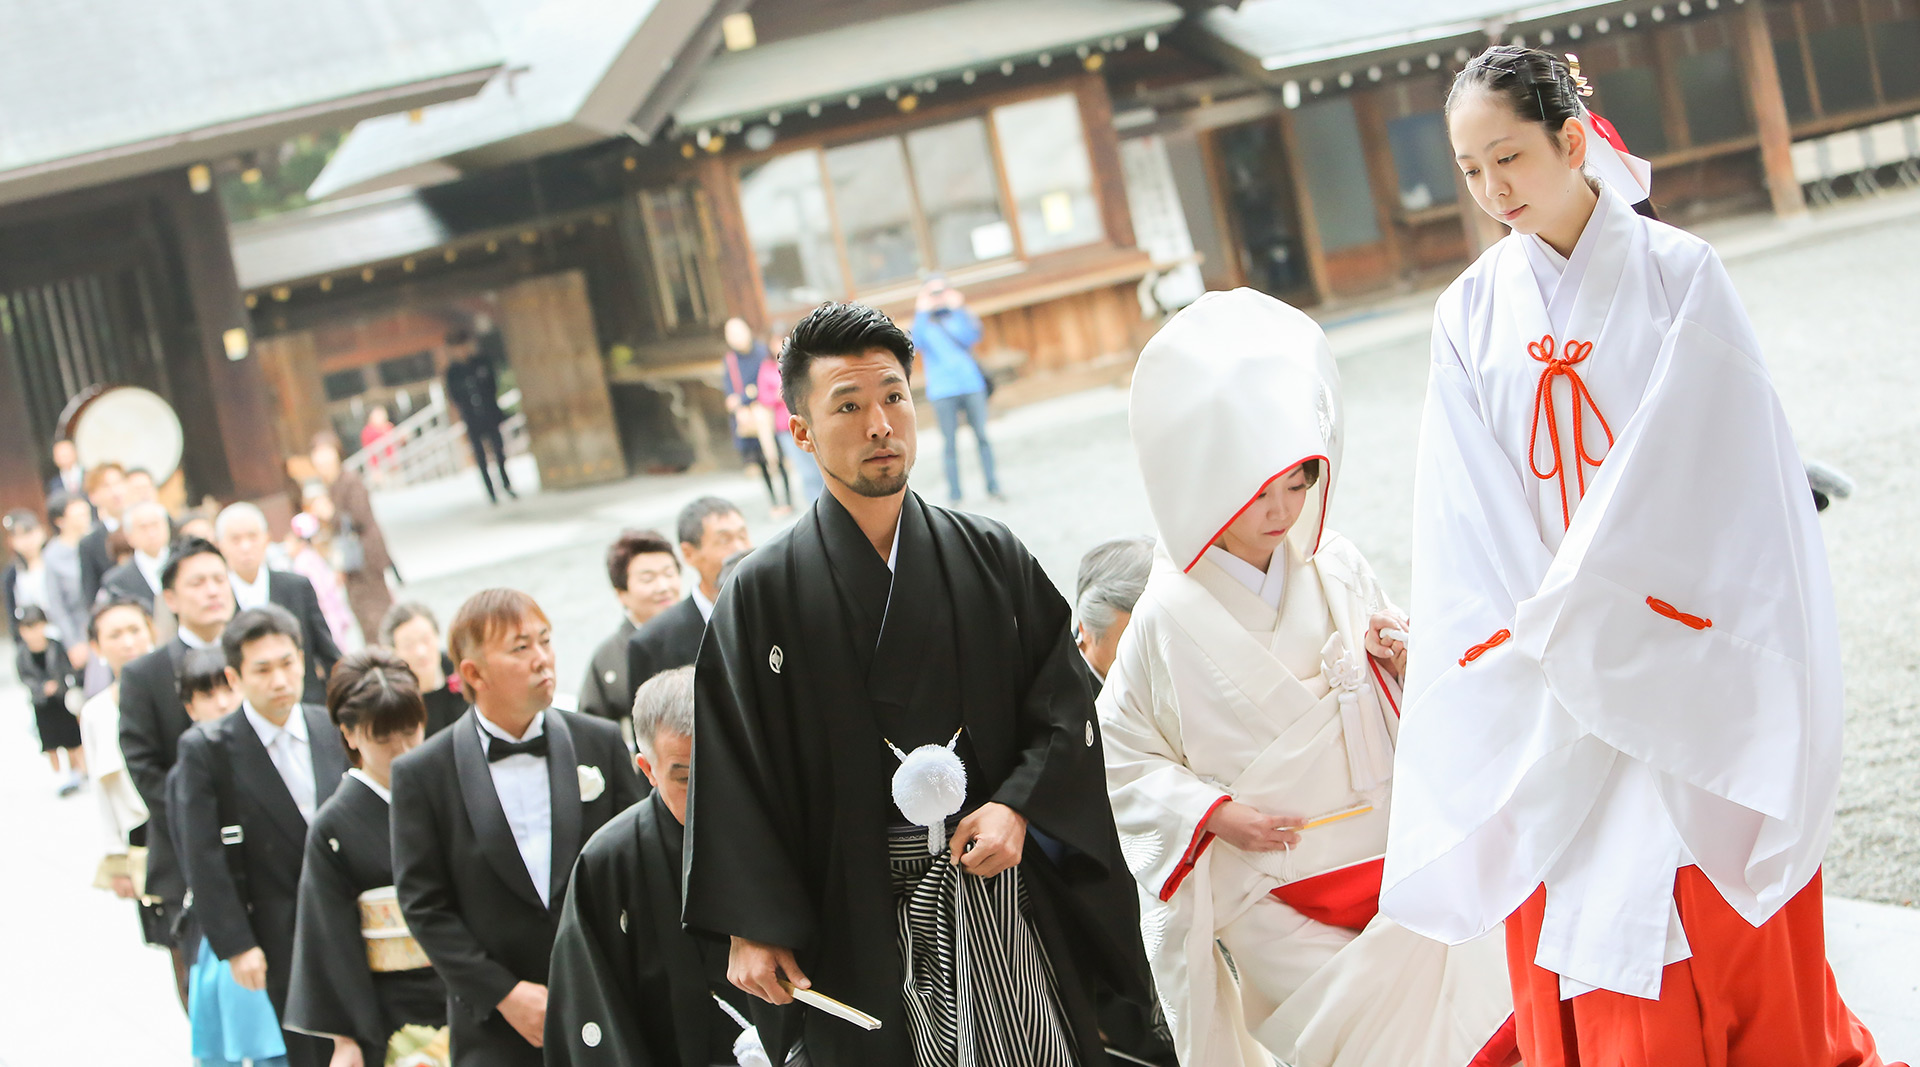 wedding at hokkaido jingu - japanese temple